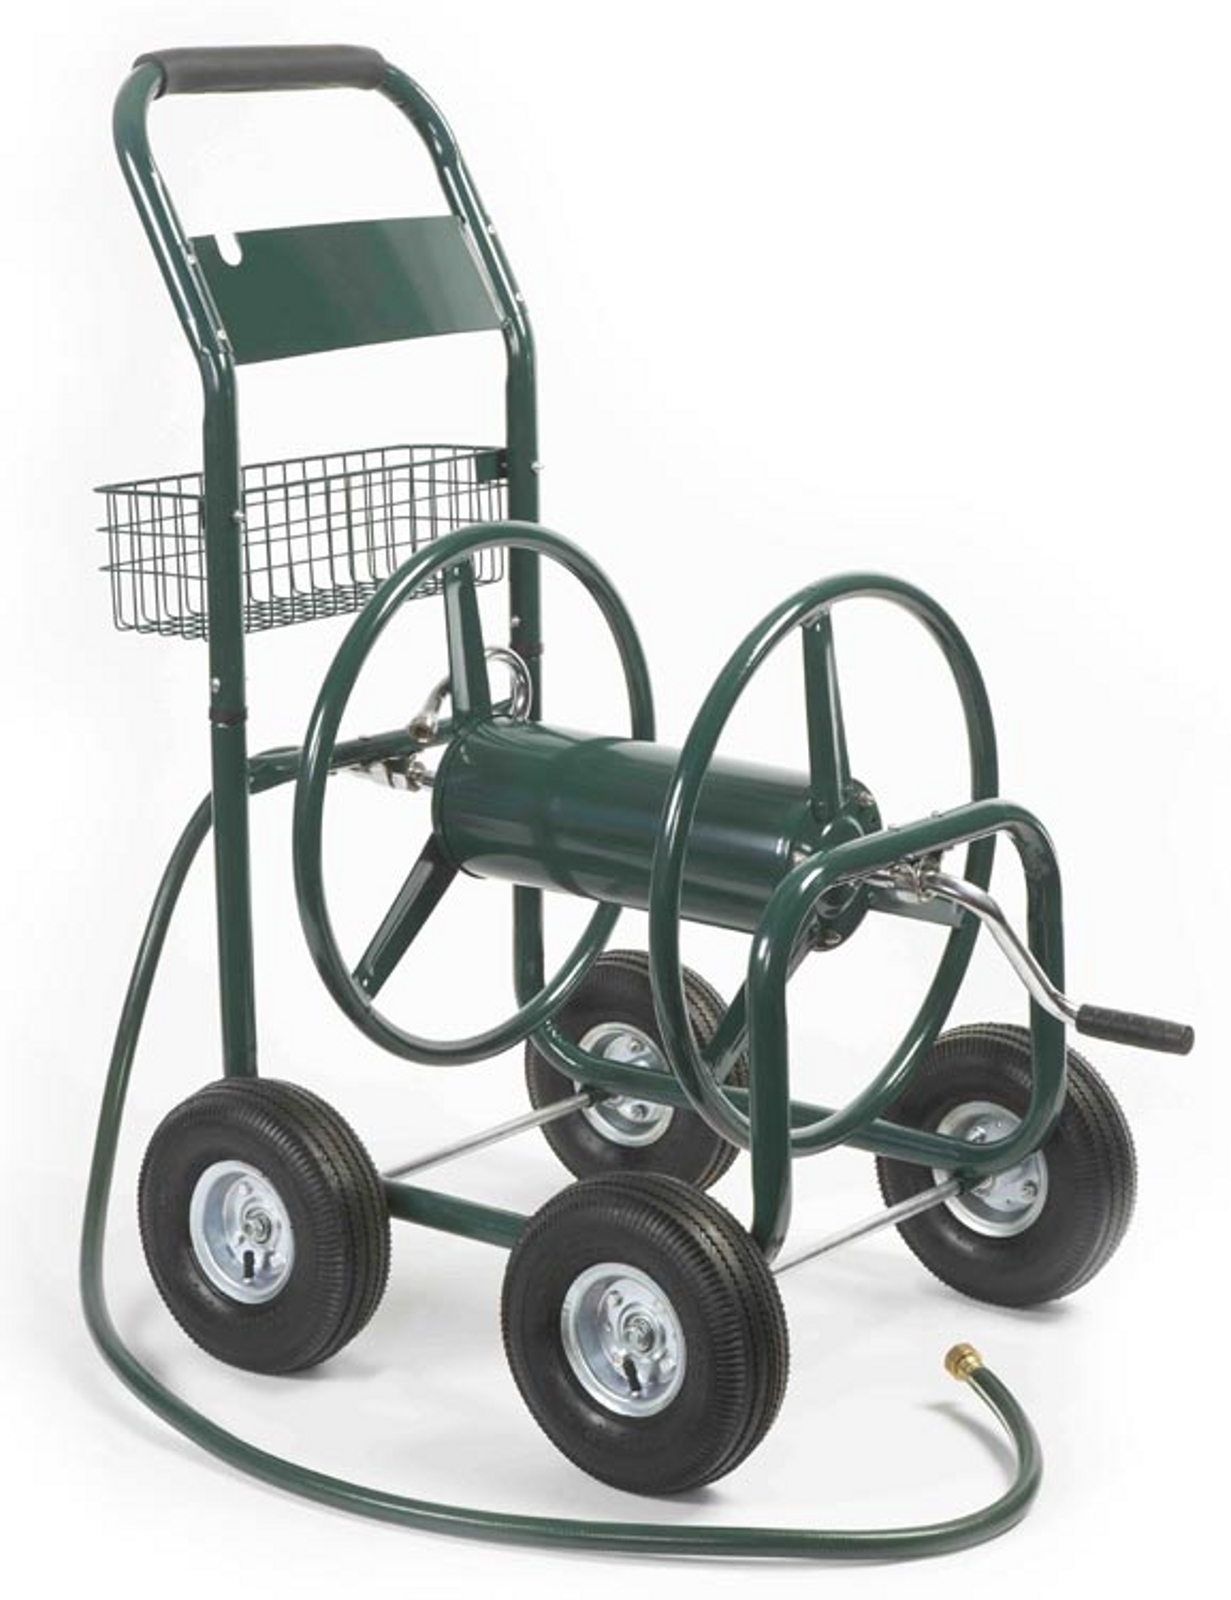 Liberty Hose reeel cart 4 wheel   Lawn & Garden   Watering, Hoses